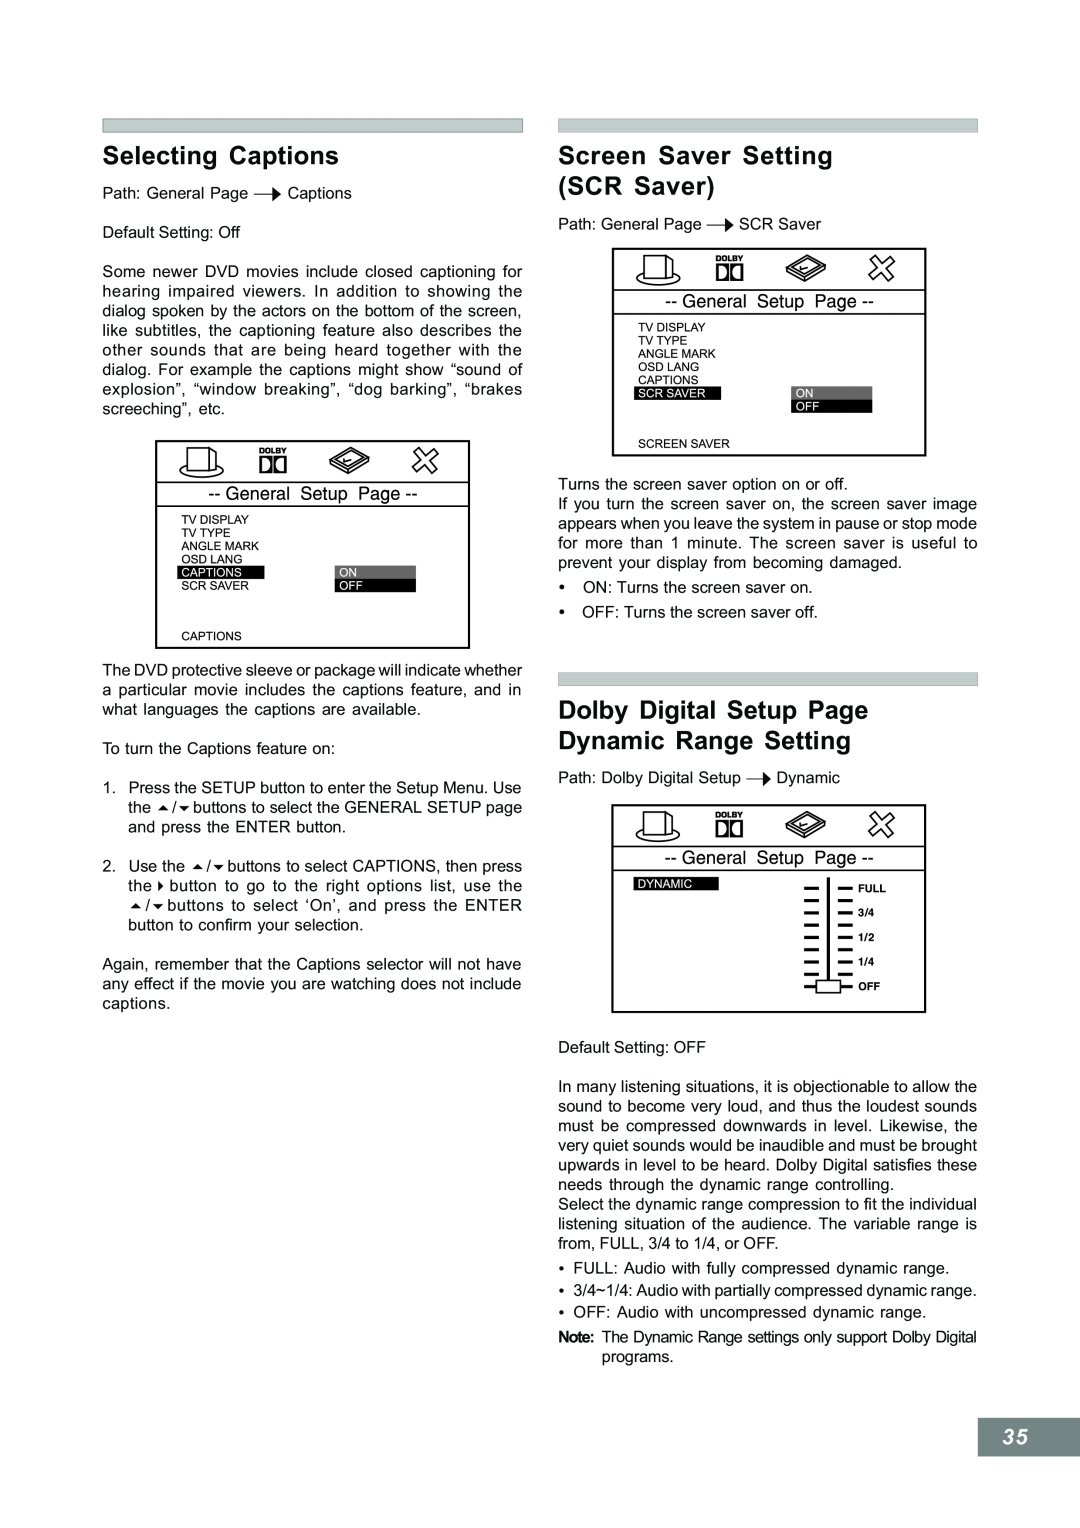 Emerson AV101 manual Selecting Captions, Screen Saver Setting, SCR Saver, Dolby Digital Setup Page Dynamic Range Setting 